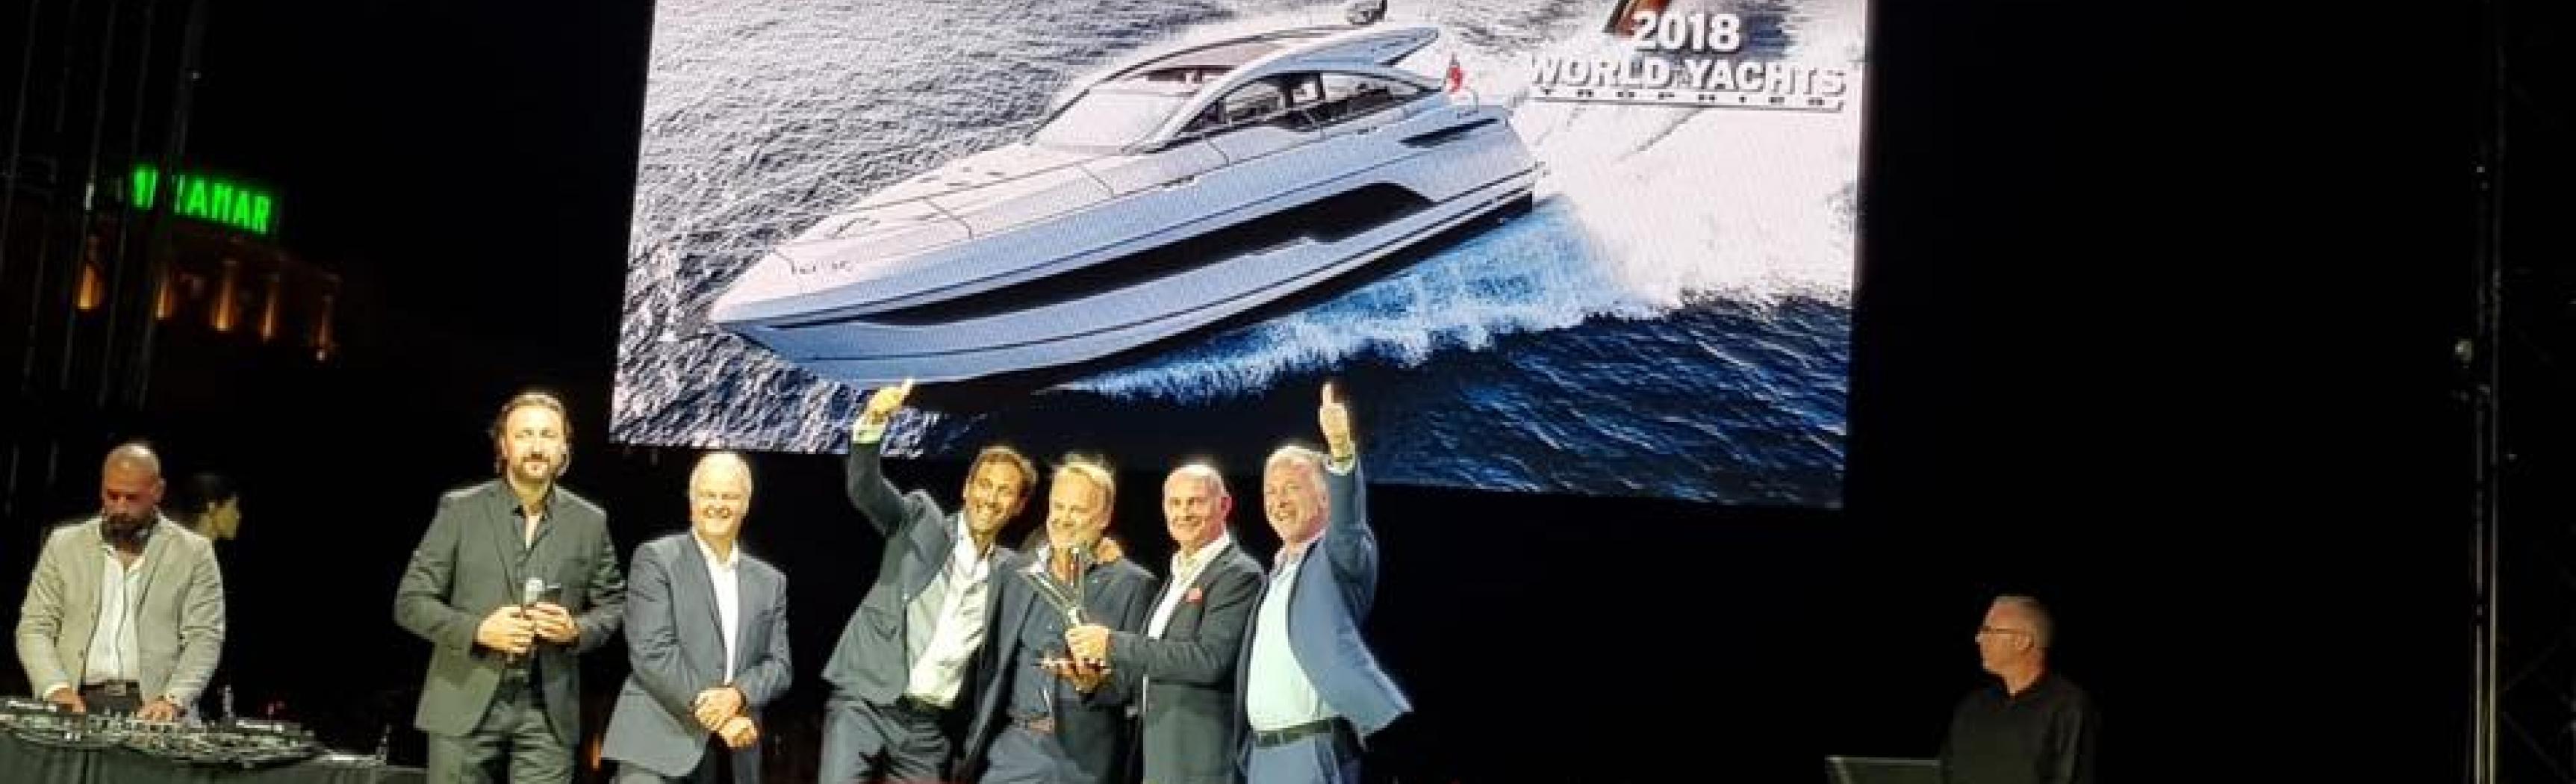 Targa 43 Open gagnant aux World Yacht Trophies 2018